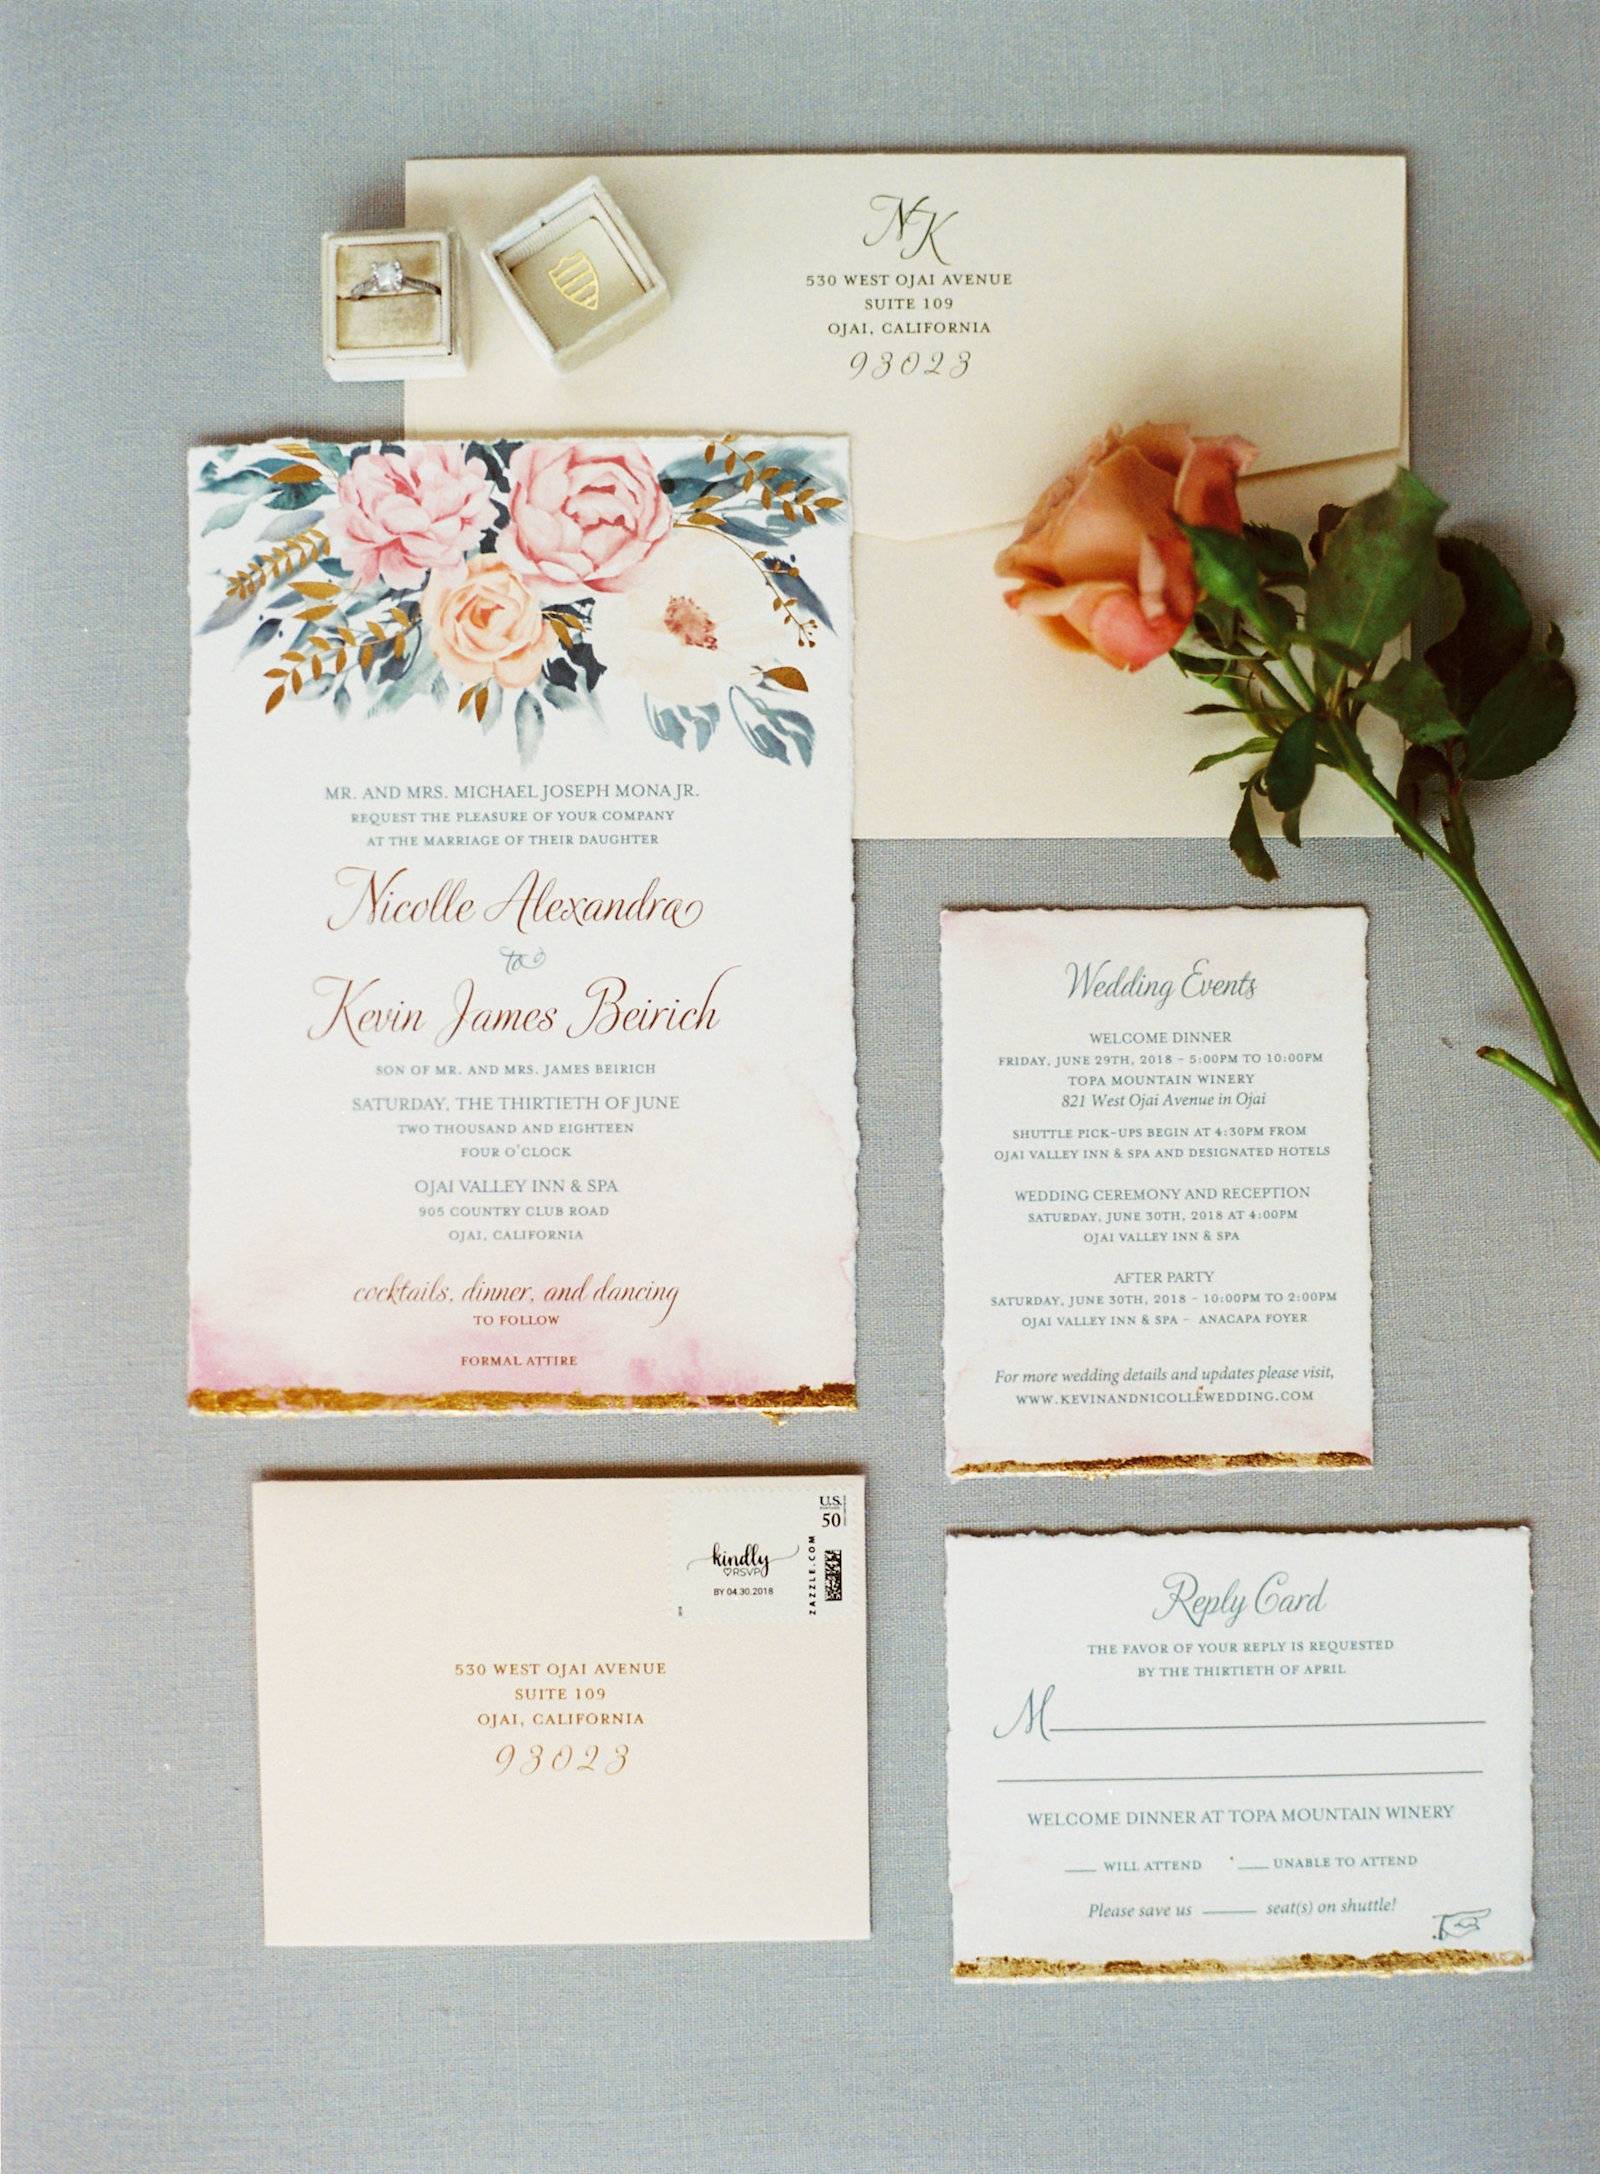 Samples of Wedding Cards | The Wedding Standard